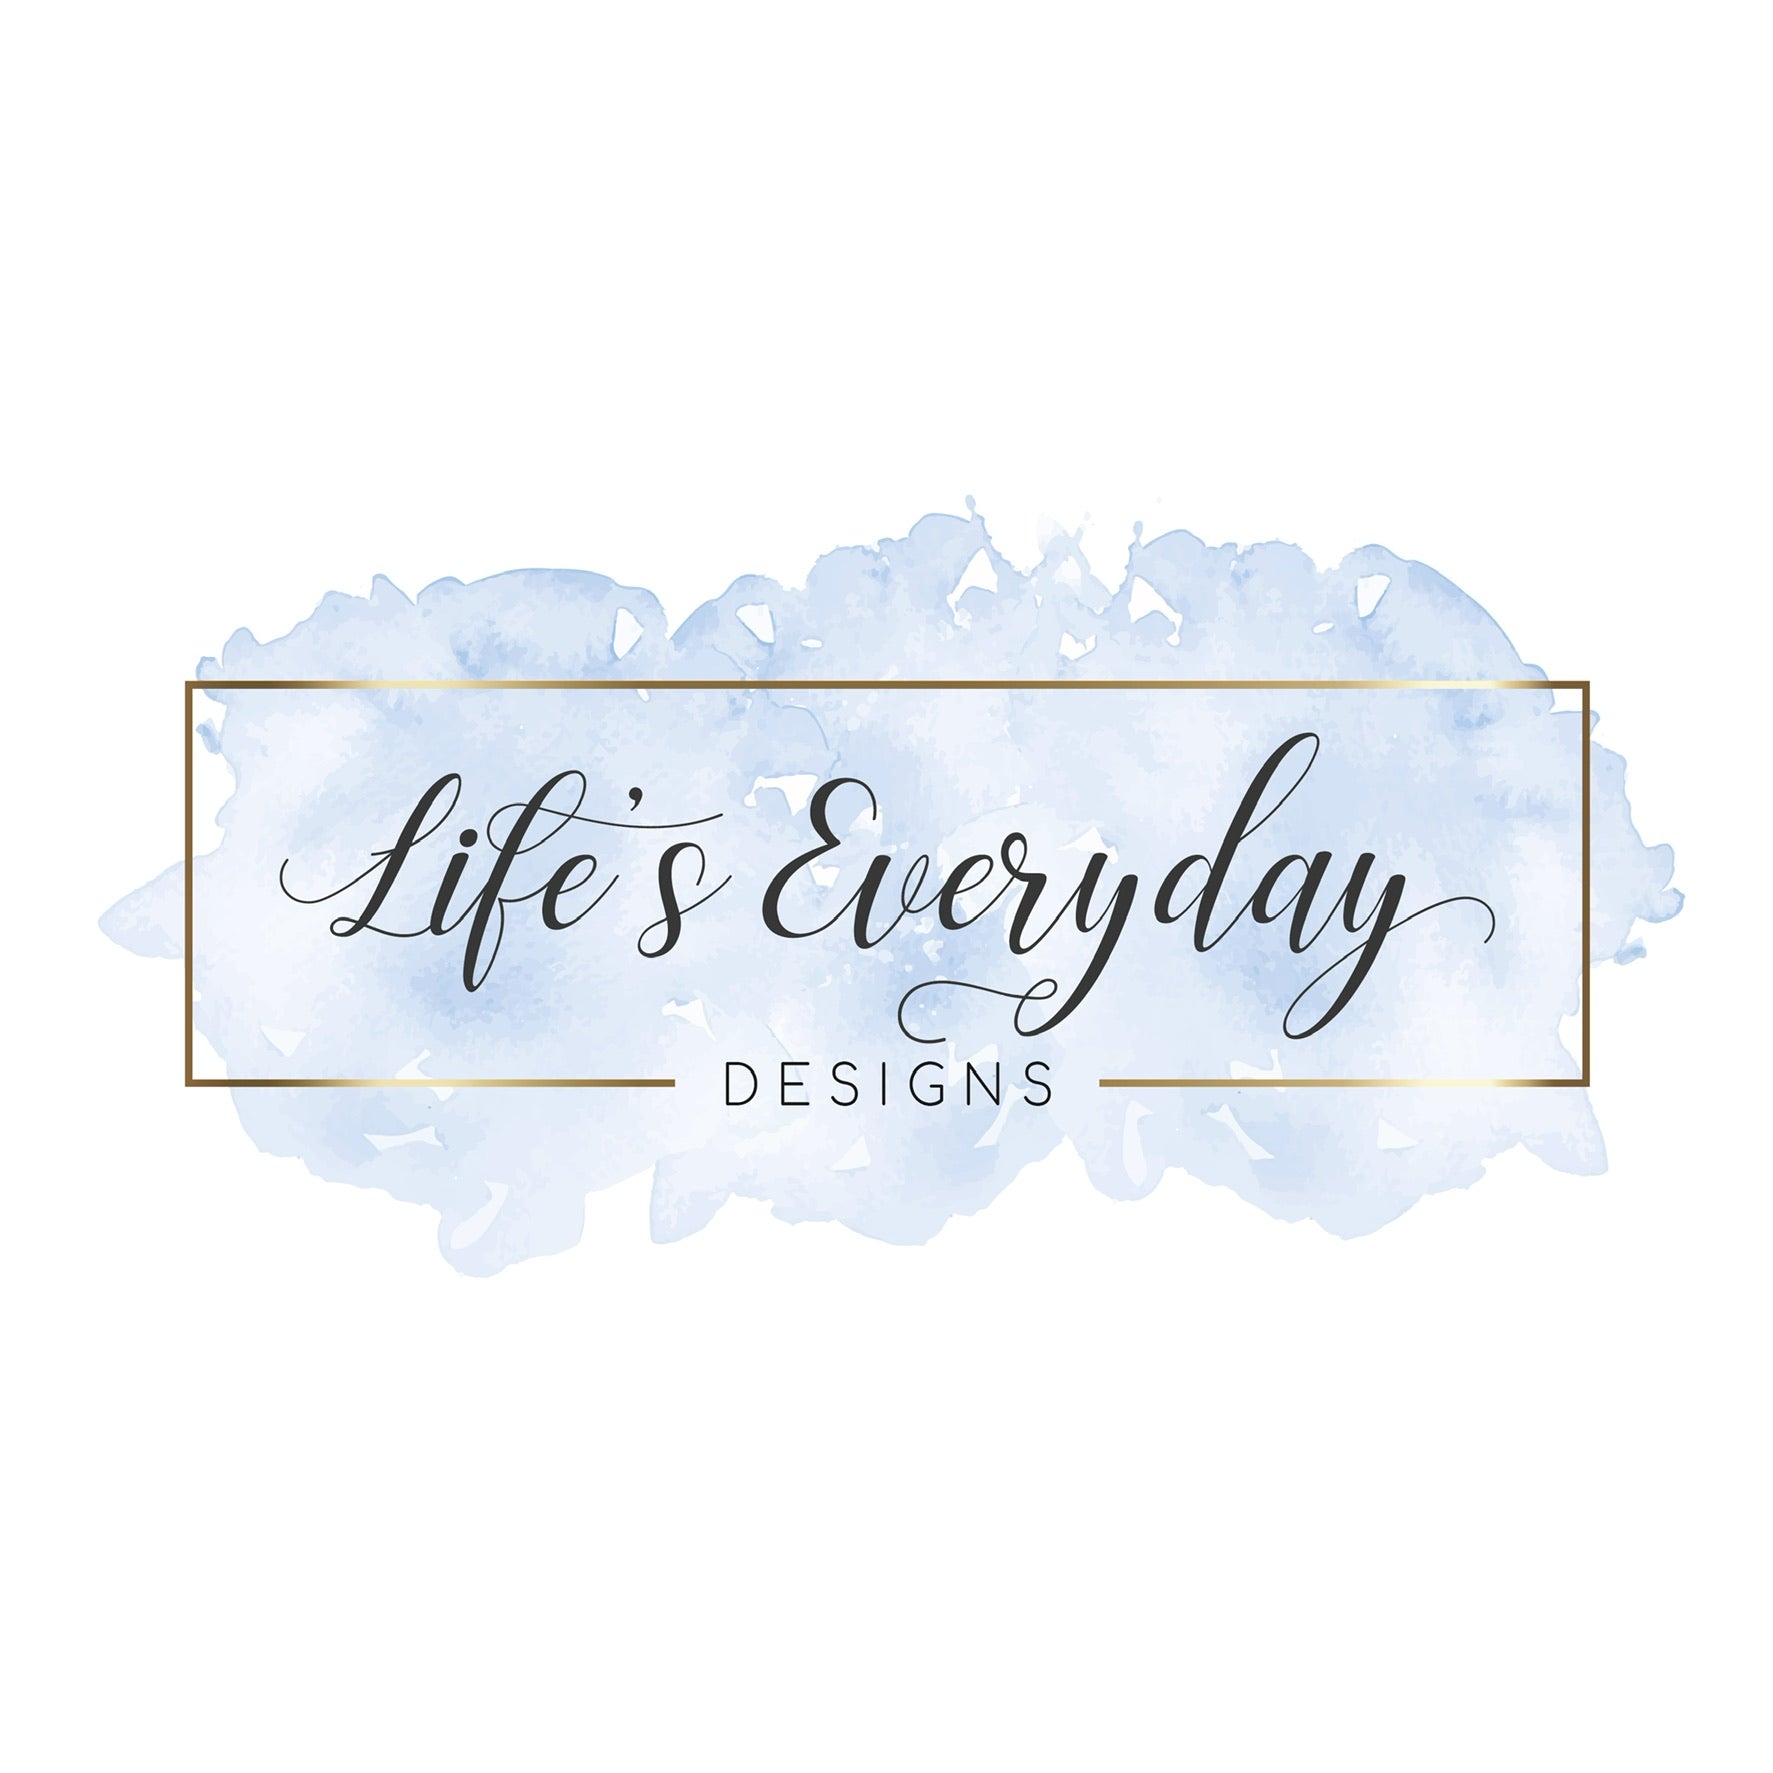 Life’s Everyday Designs